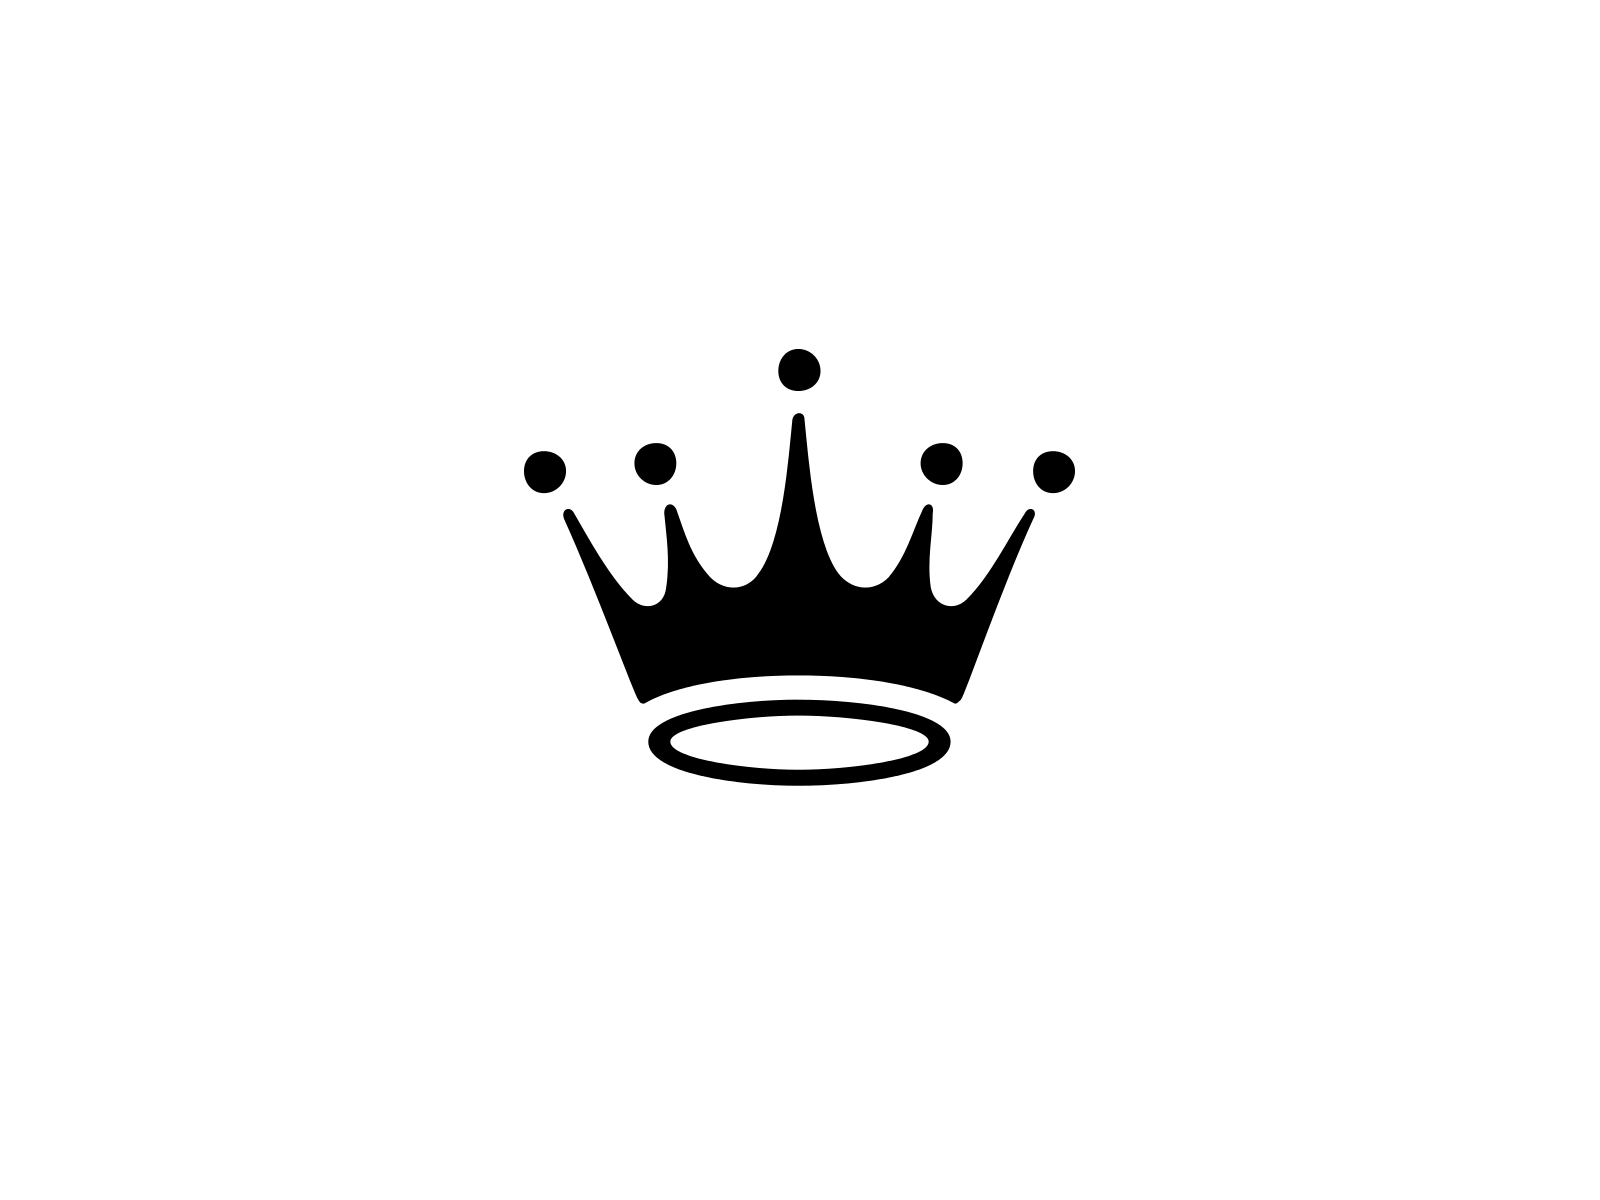 White Crown Logo - crown logos - Kleo.wagenaardentistry.com